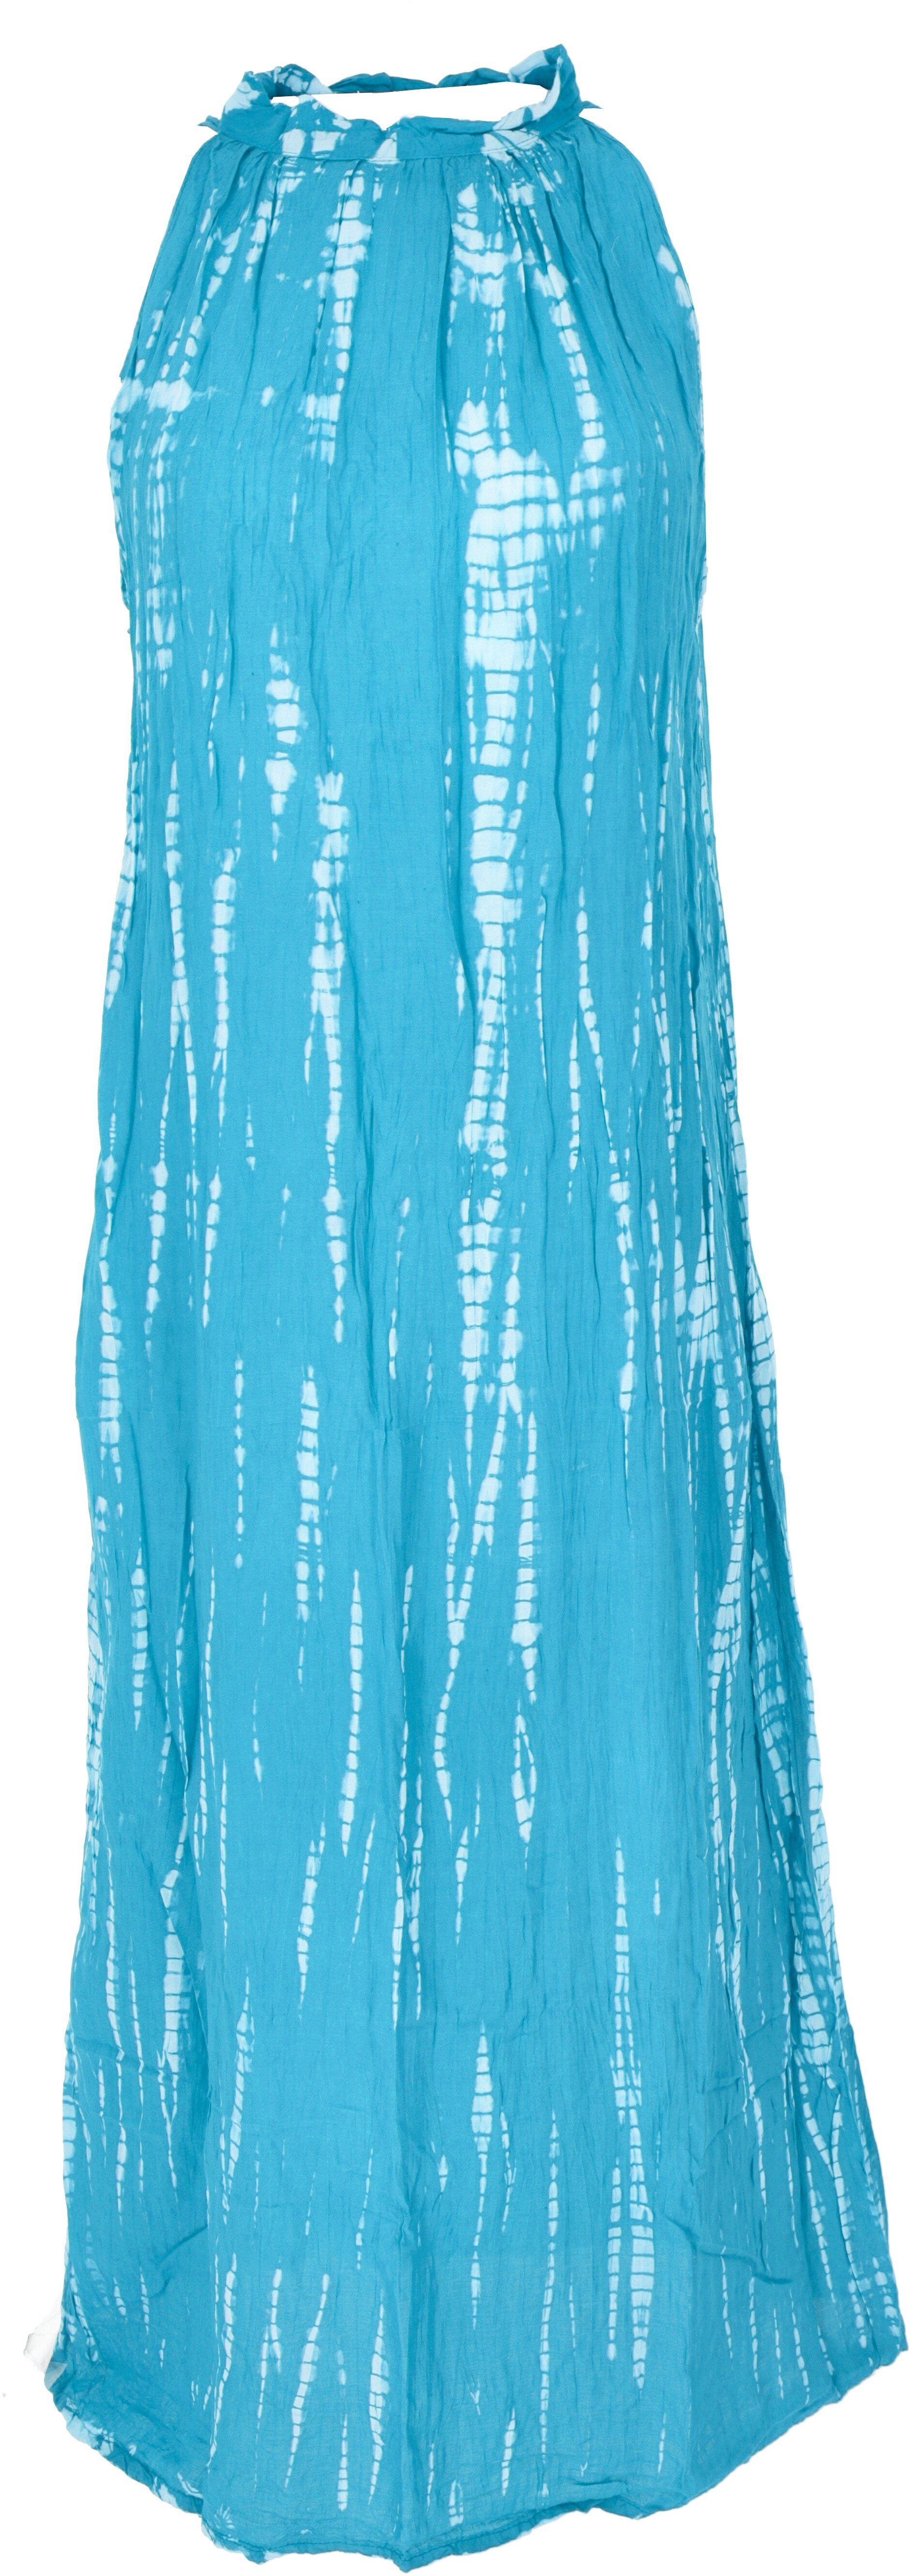 Batik Bekleidung Midikleid Boho Guru-Shop neck.. Maxikleid, blau high alternative Boho, Strandkleid,